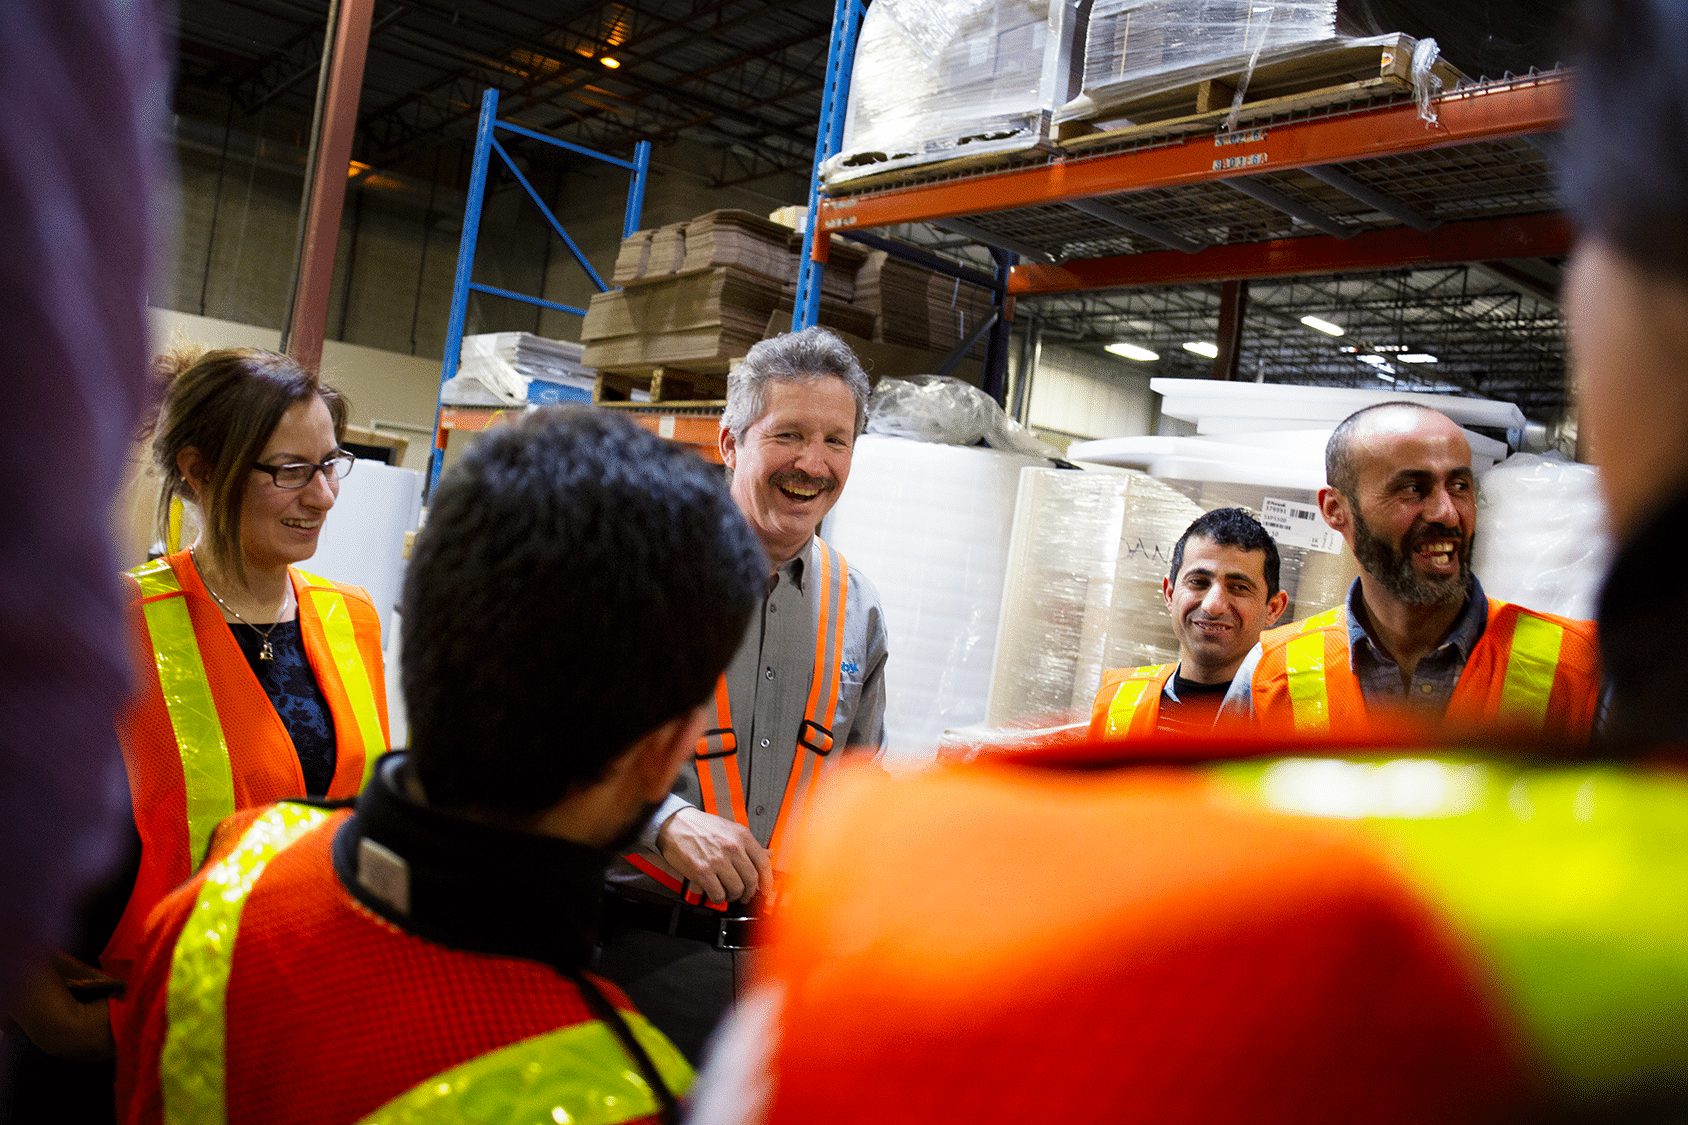 Jim Estill speaks with employees in a warehouse.